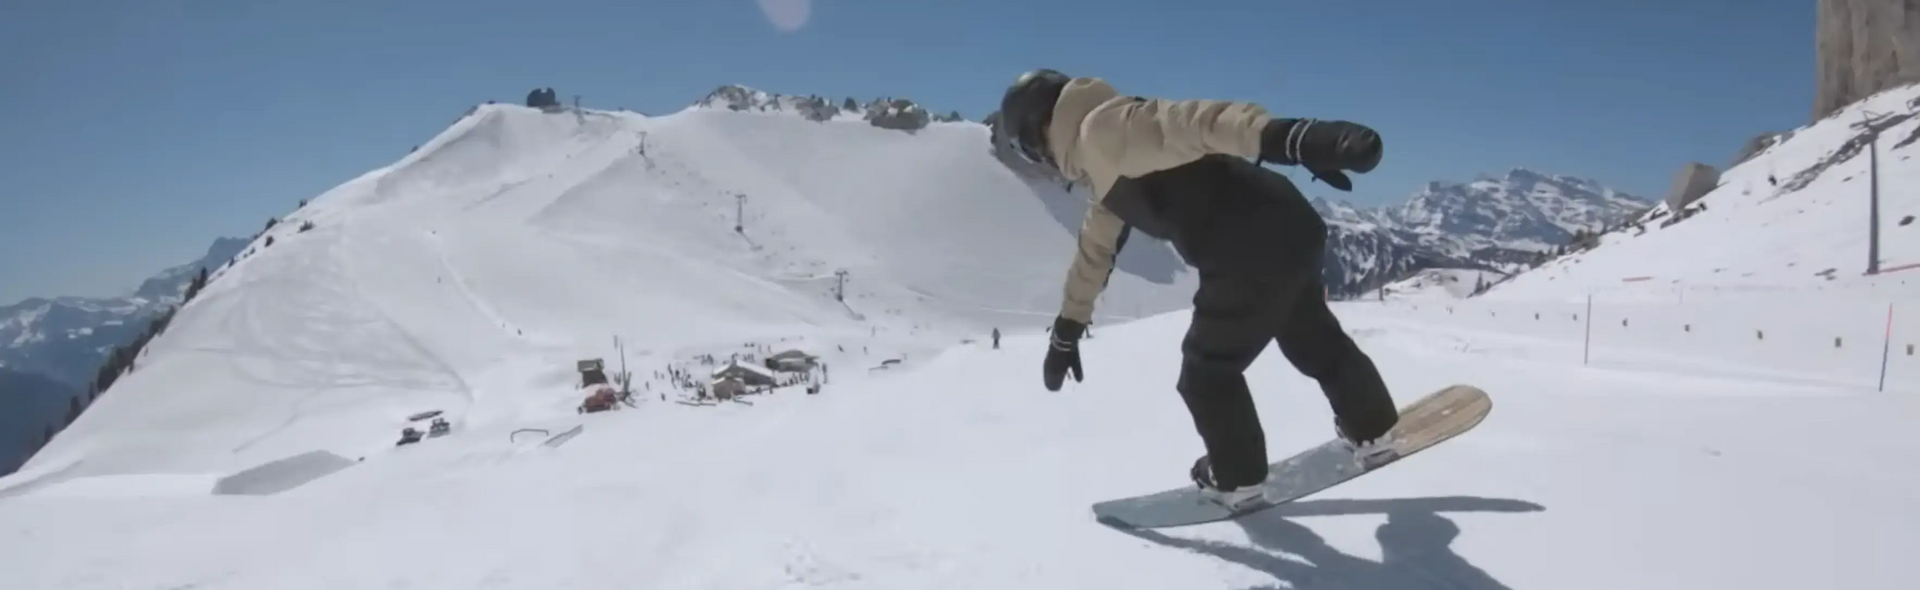 Man snowboarding in snow